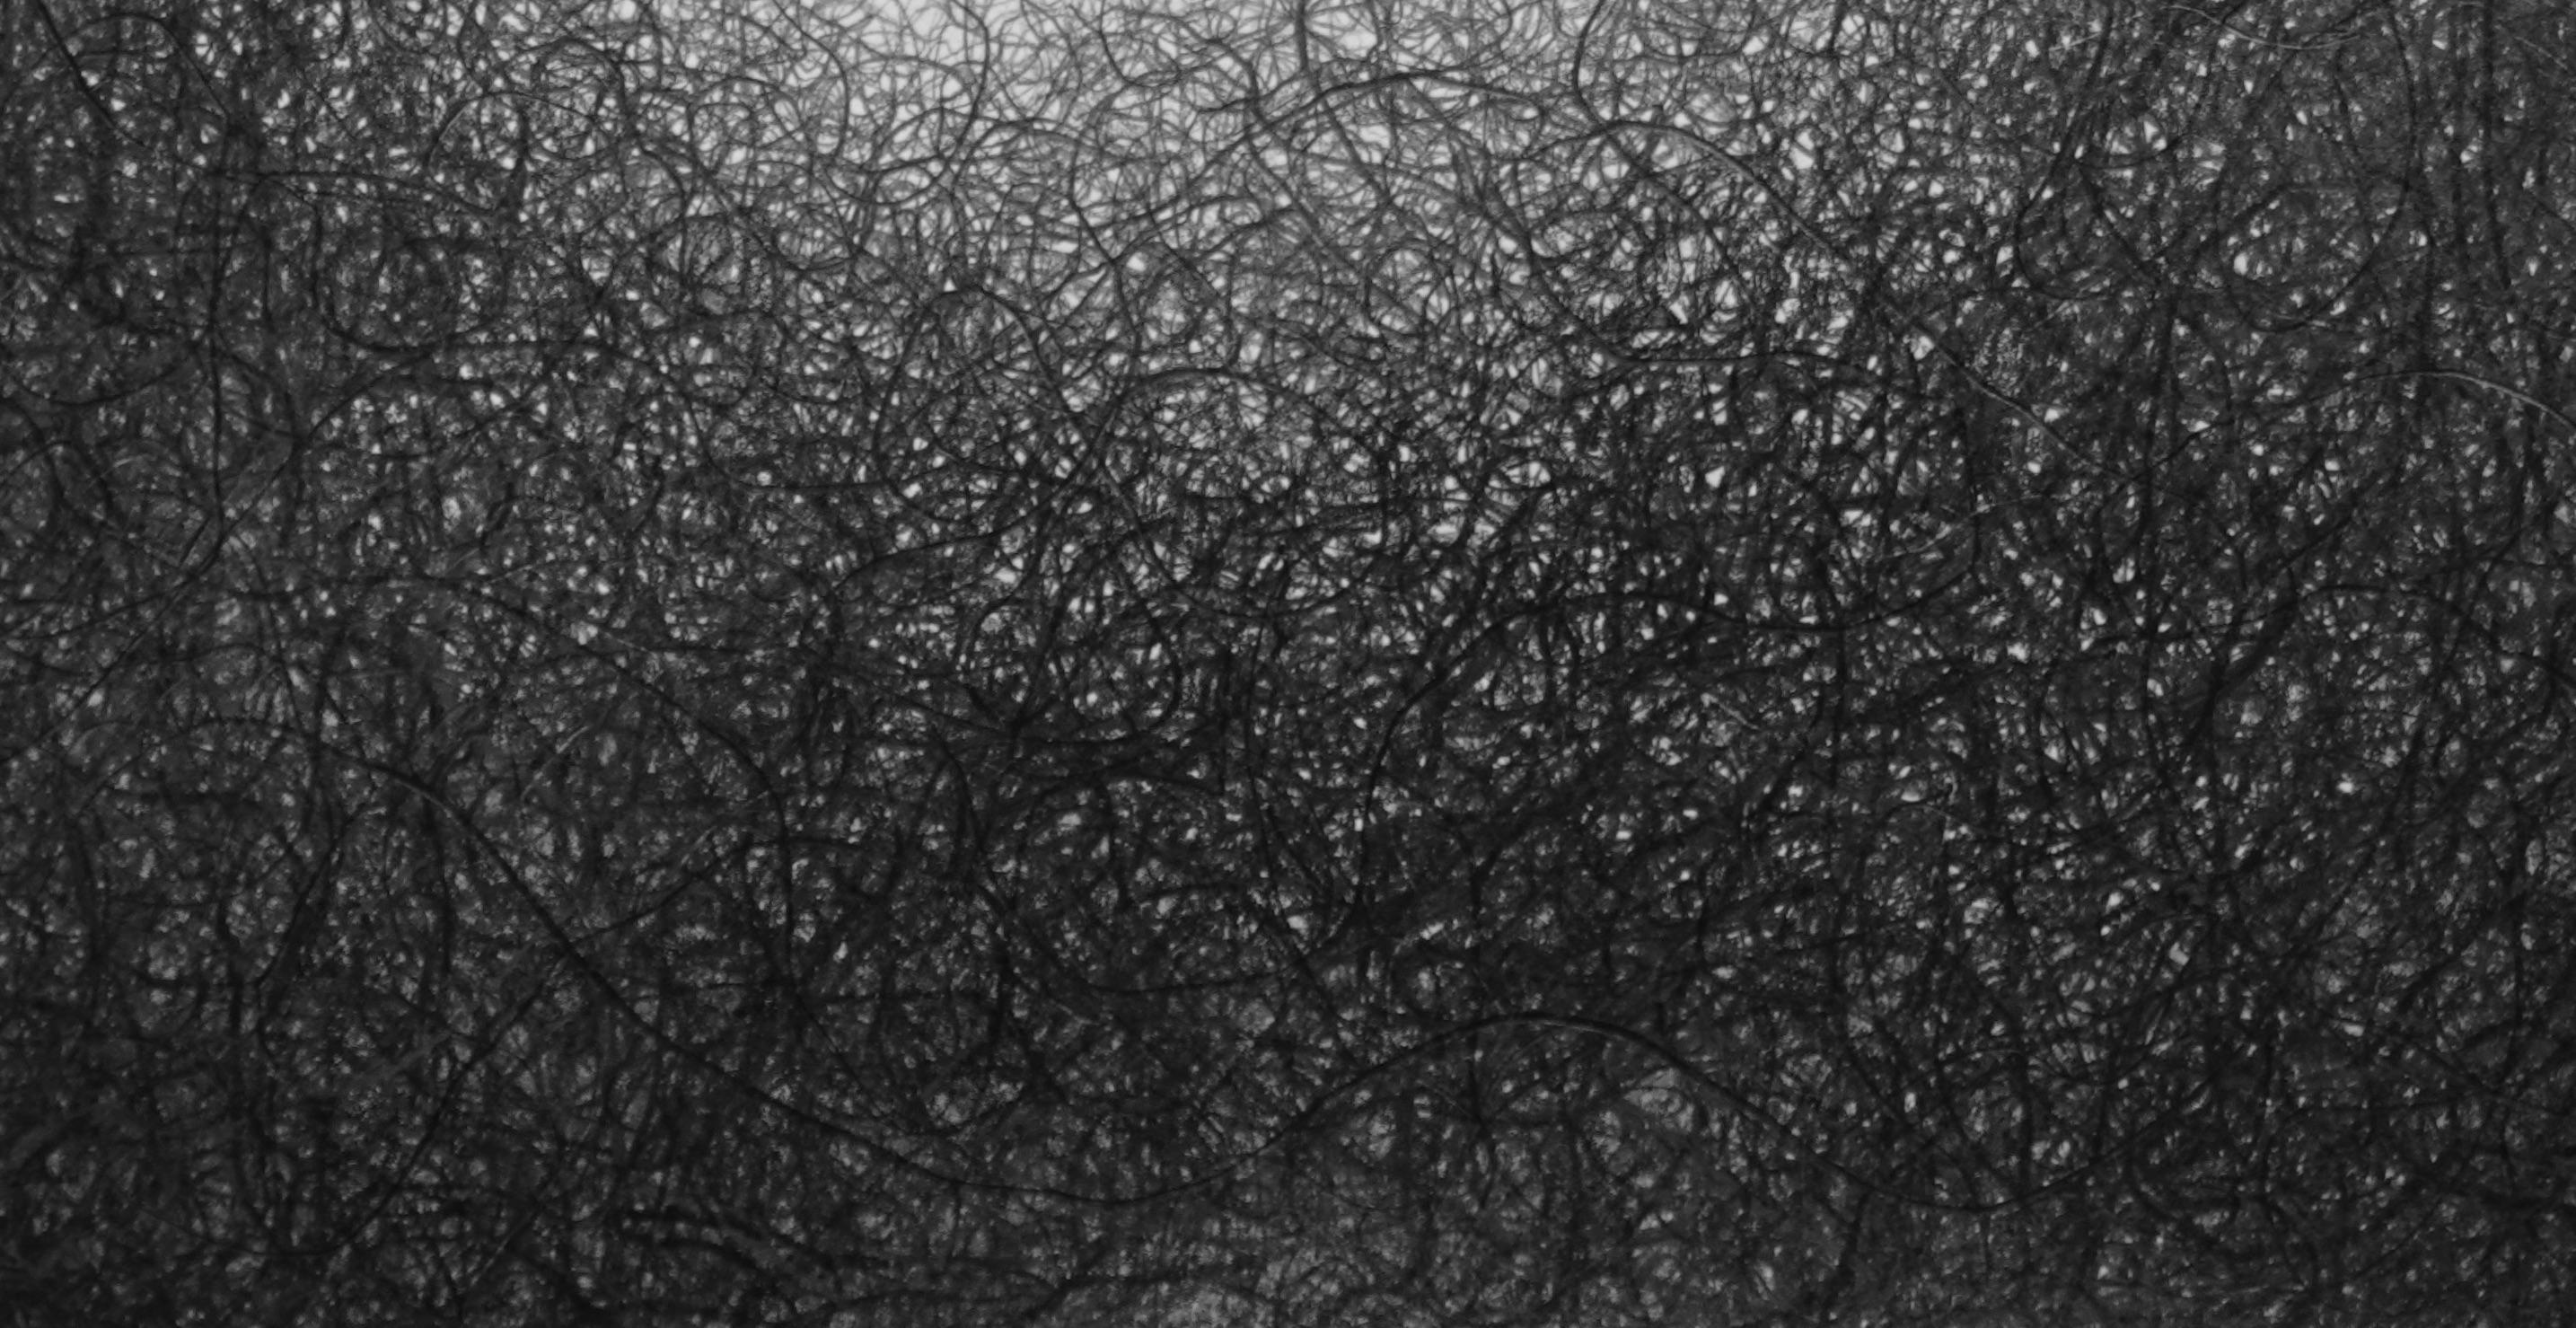 Minimal, black and white, graphite drawing: 'PIECE' - Contemporary Art by Judi Tavill